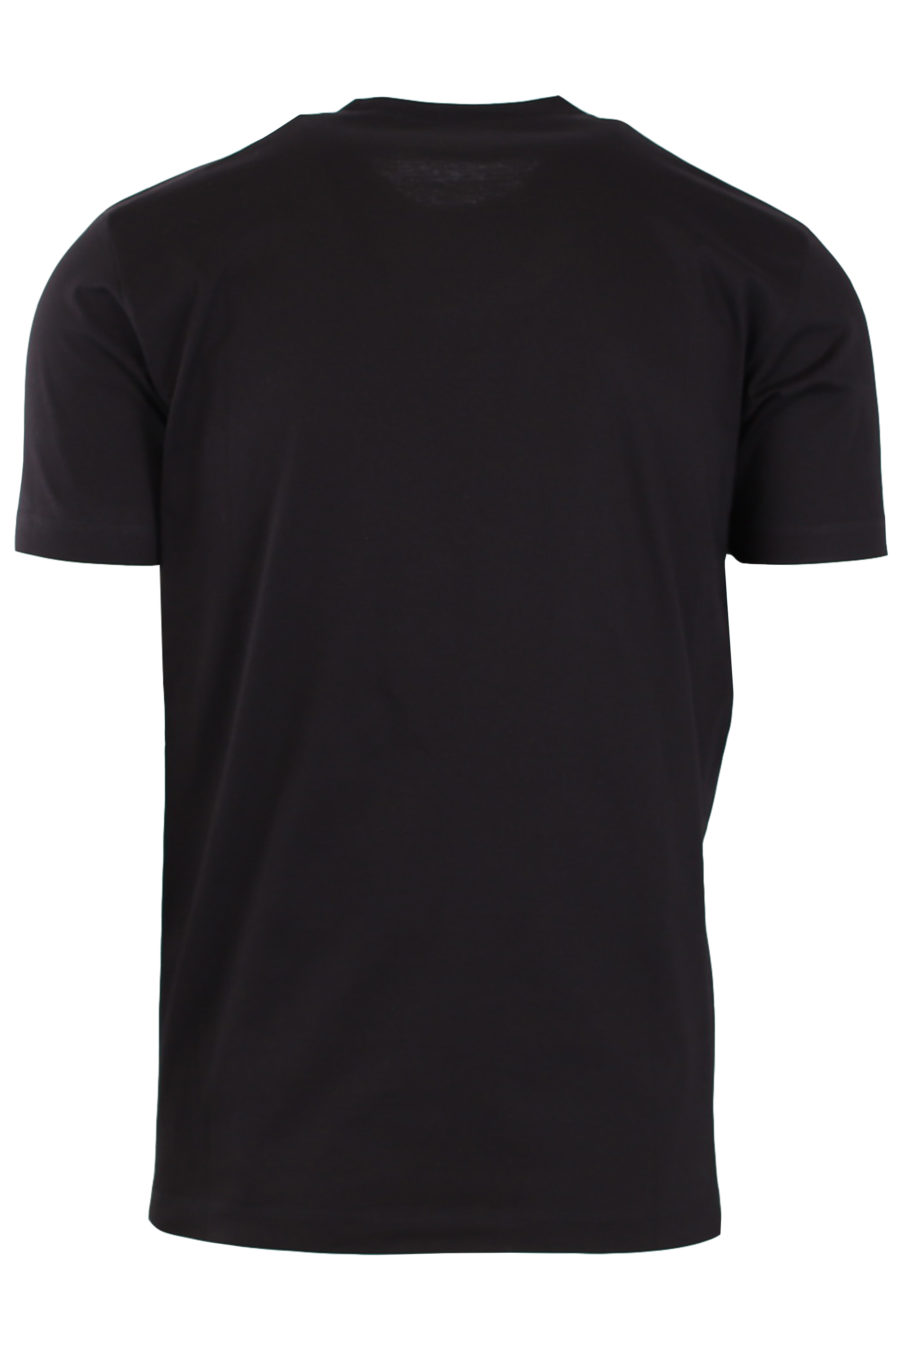 Camiseta negra con estampado blanco "Ceresio 9 Milano" - 88b633ee9fab3a618c118eb222add1974b94d03f